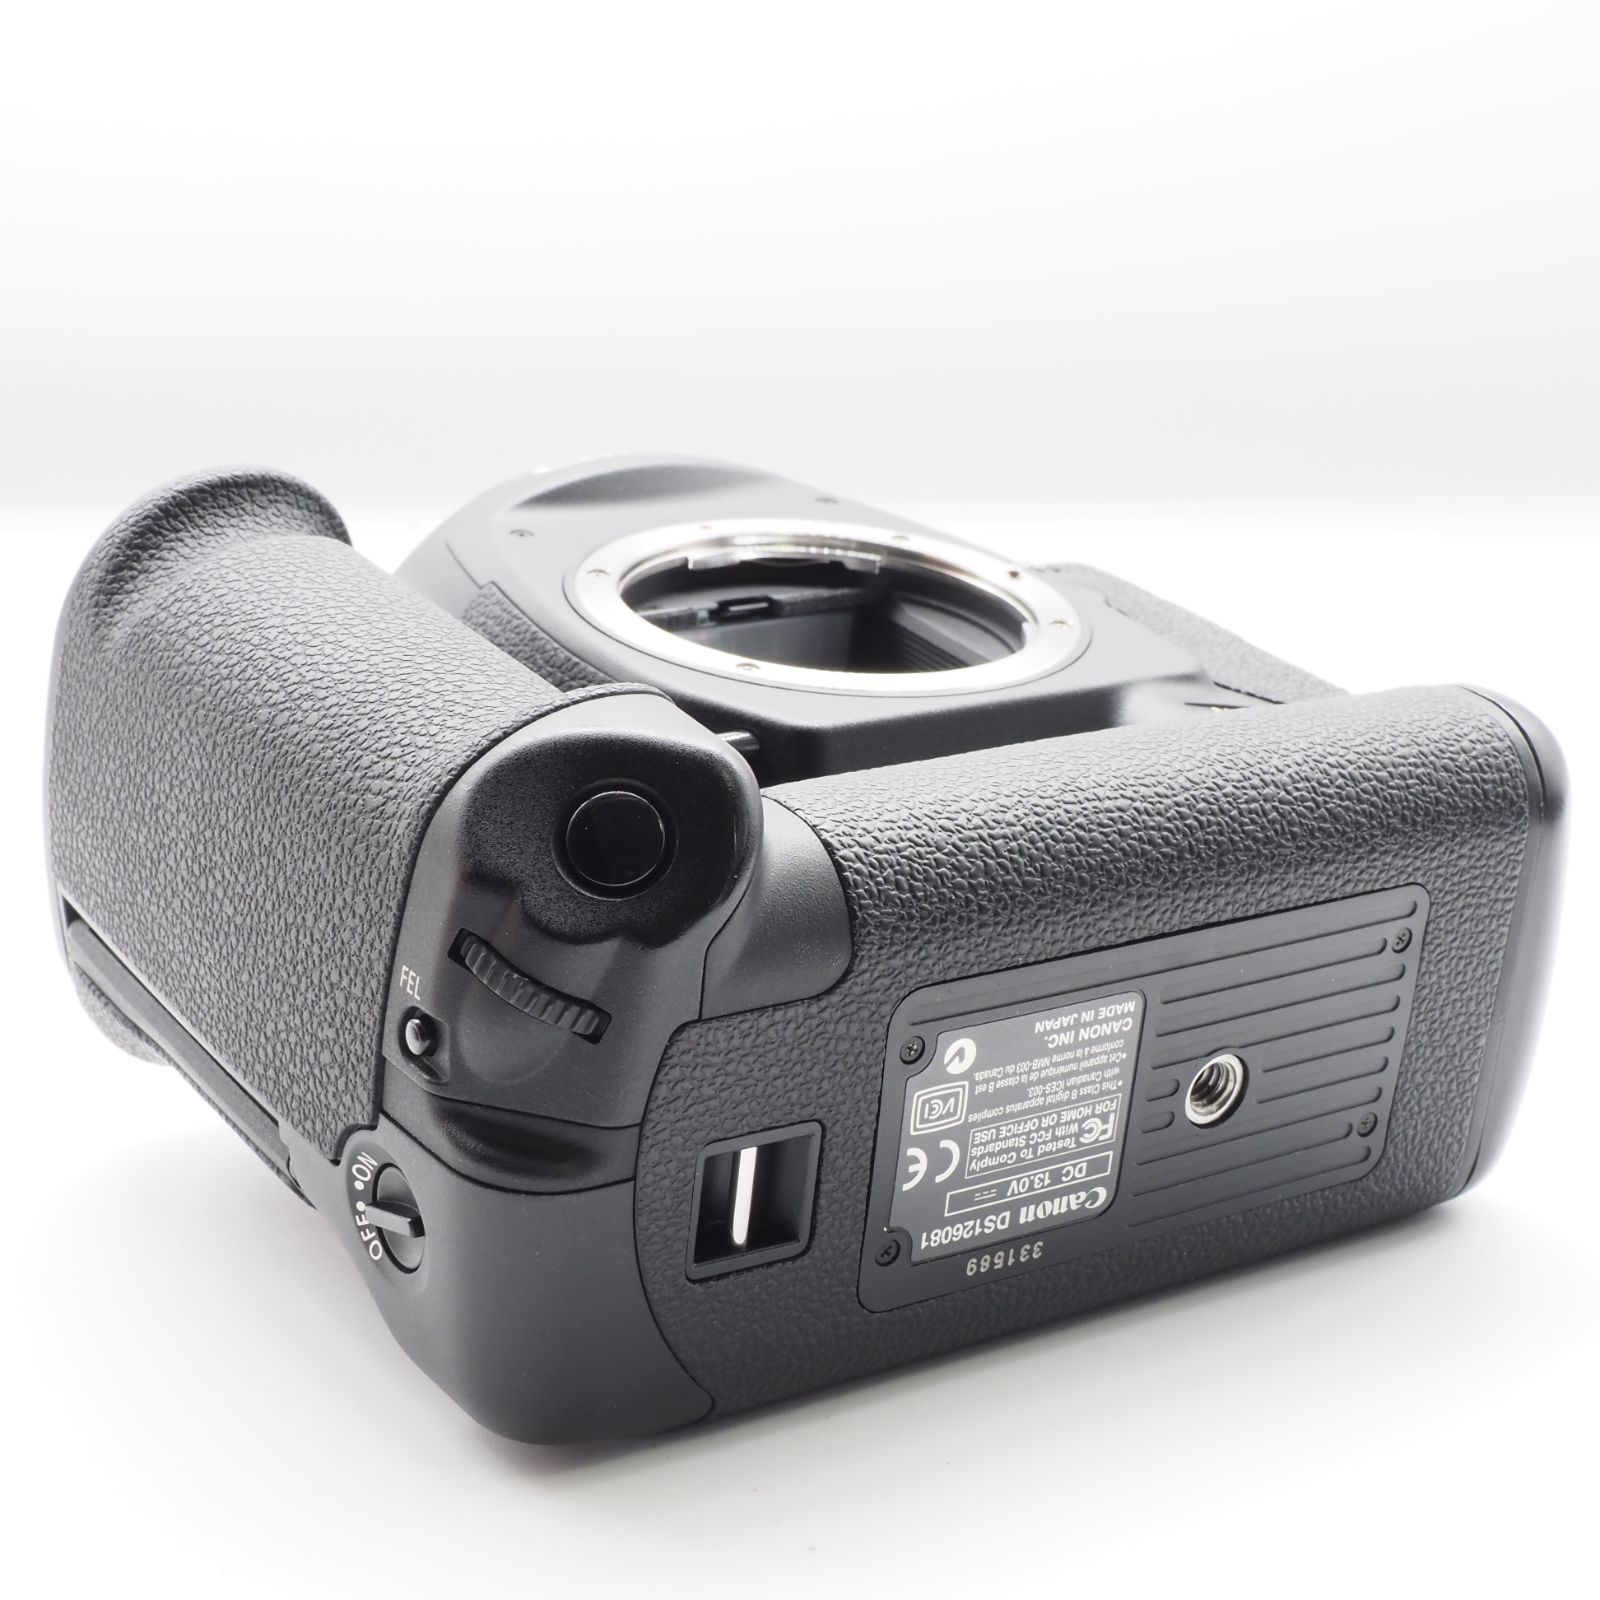 Canon デジタル一眼レフカメラ EOS-1Ds Mark II ボディ #2786 - メルカリ